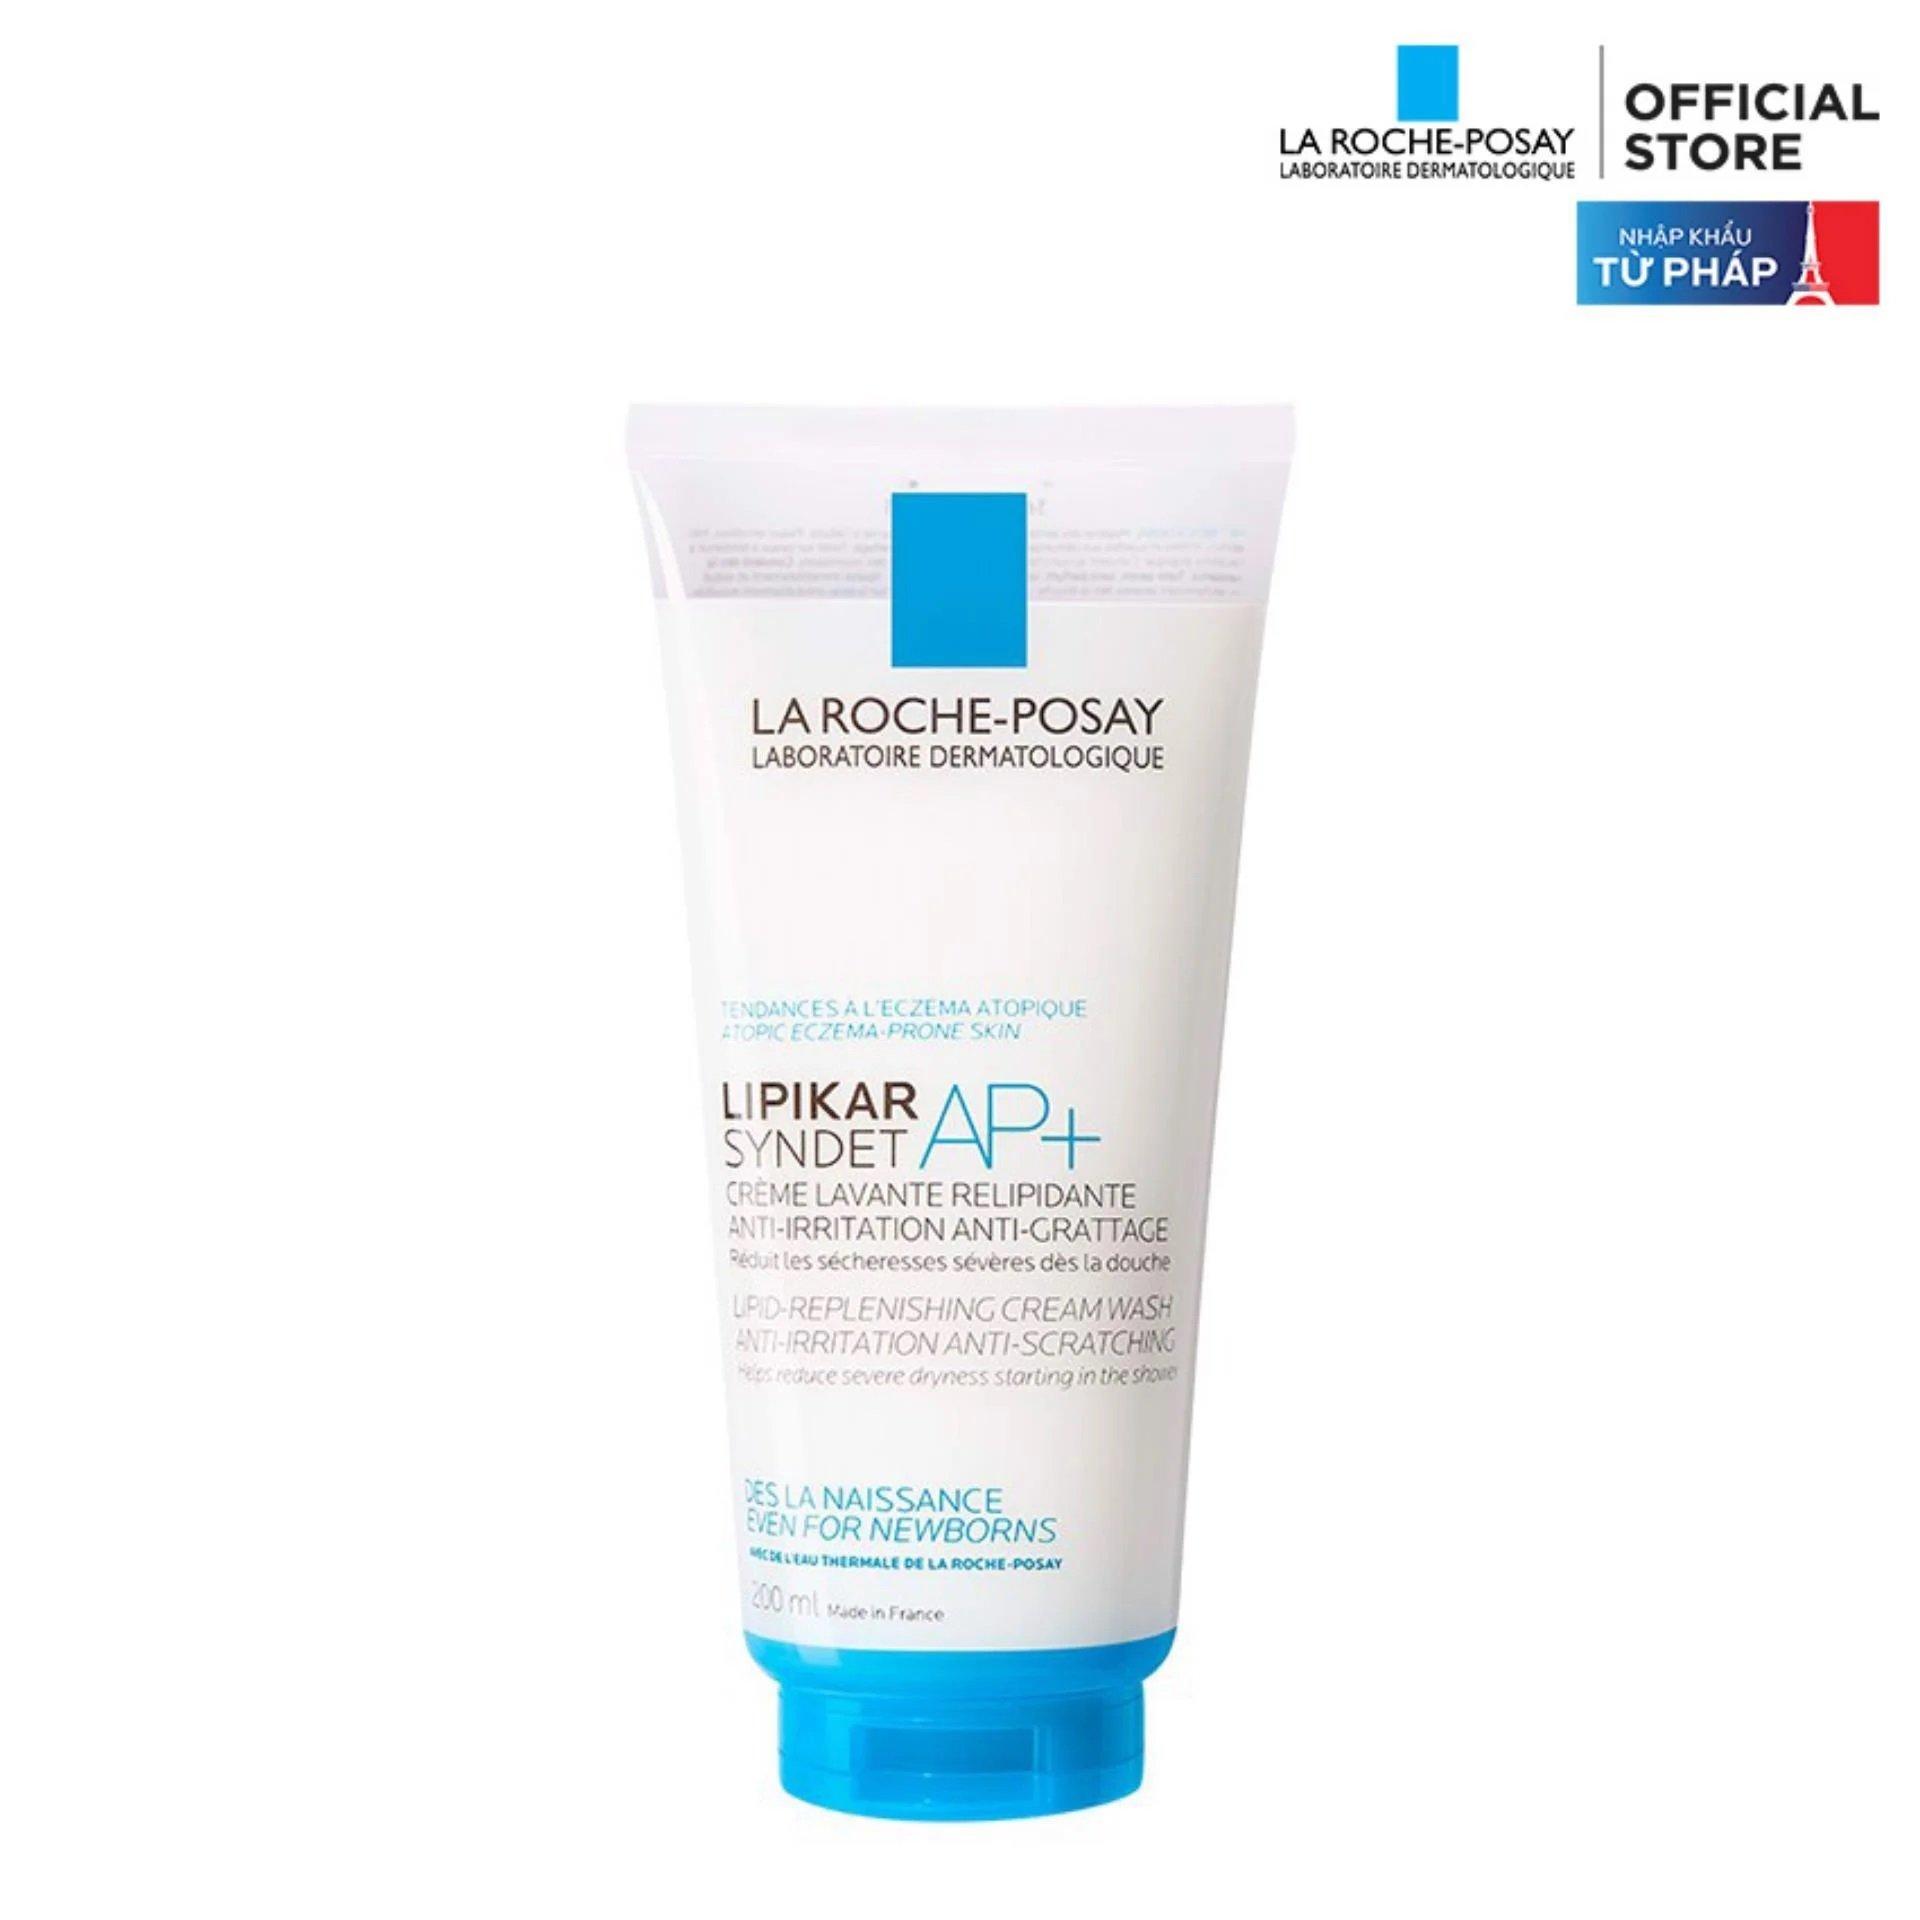 La Roche-Posay Lipikar Syndet Ap+ Cream